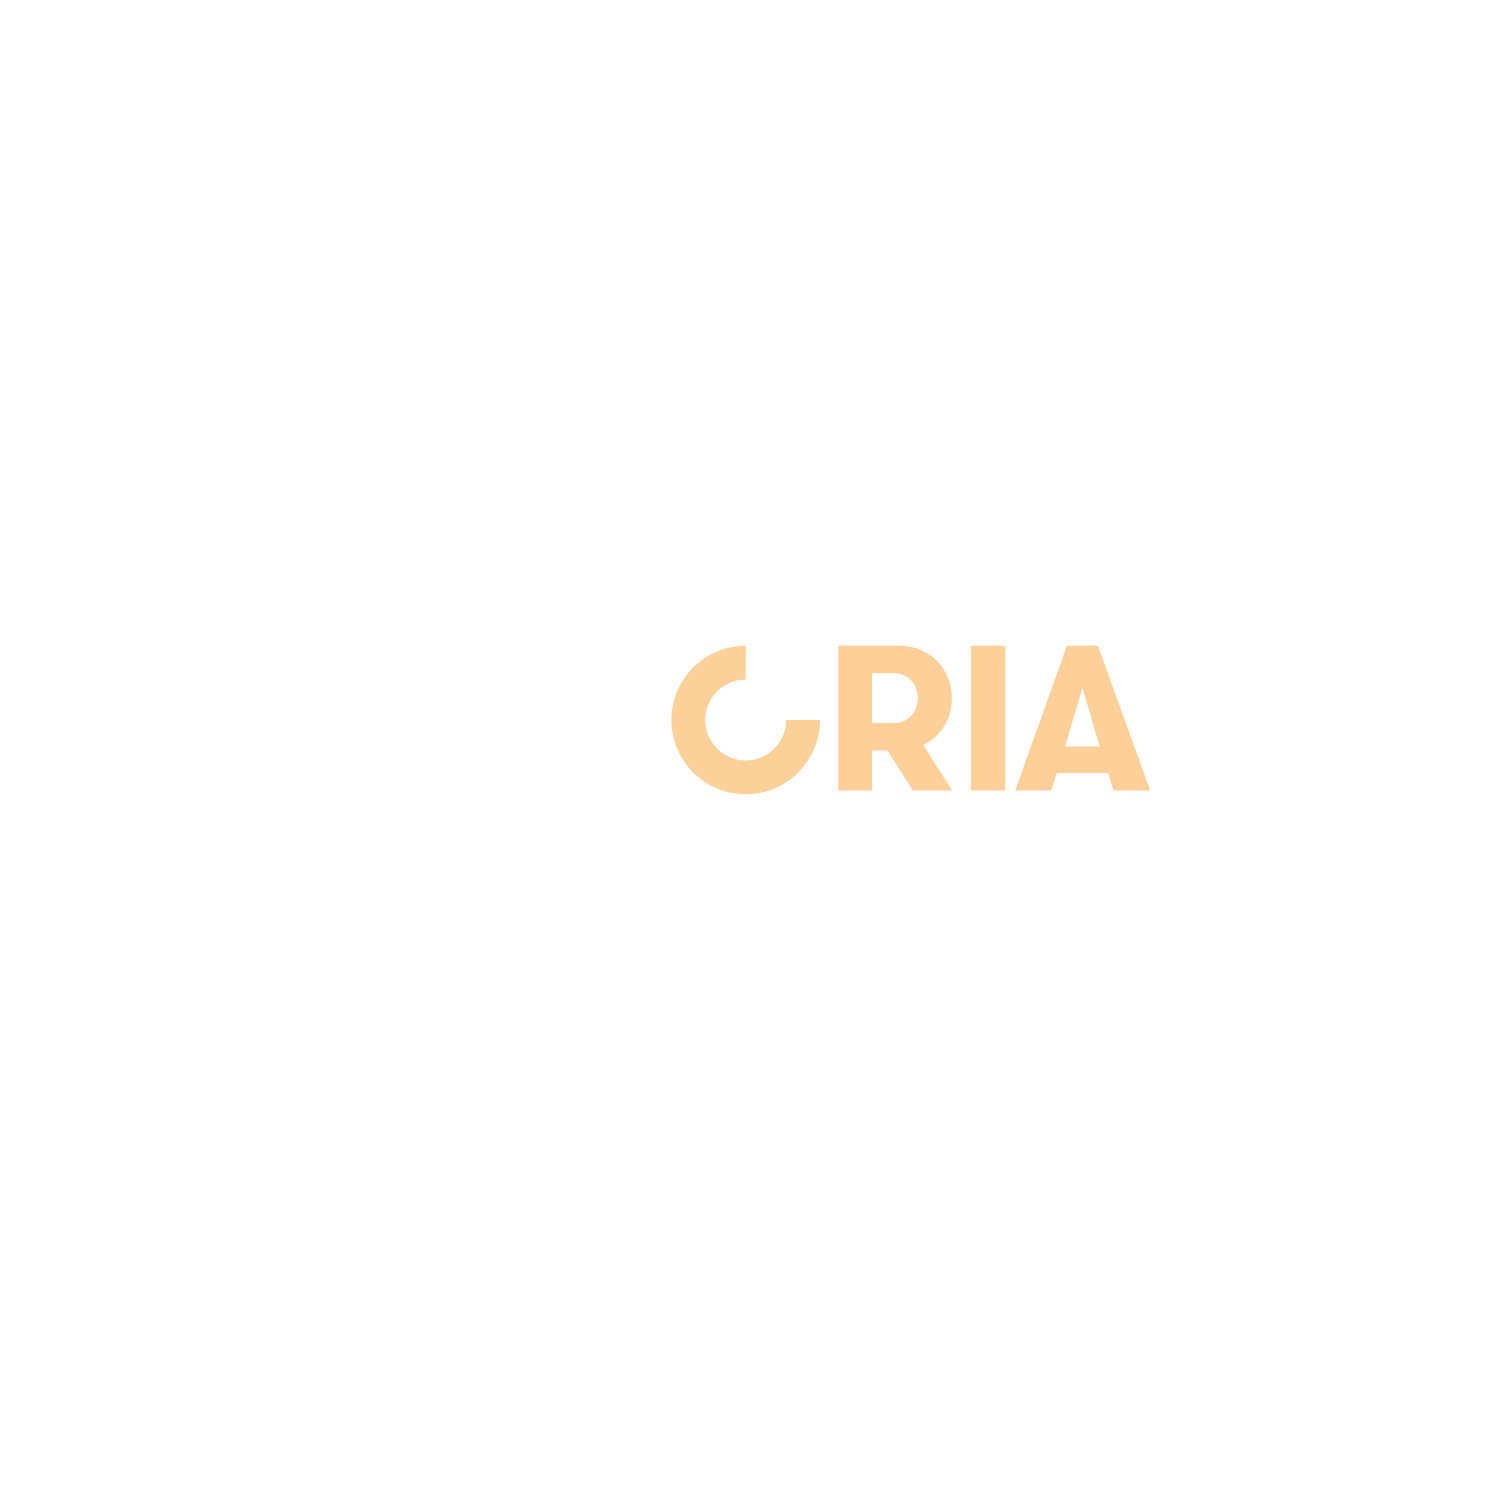 Josselin tourette – ESTORIA – logo – fond bleu – 2